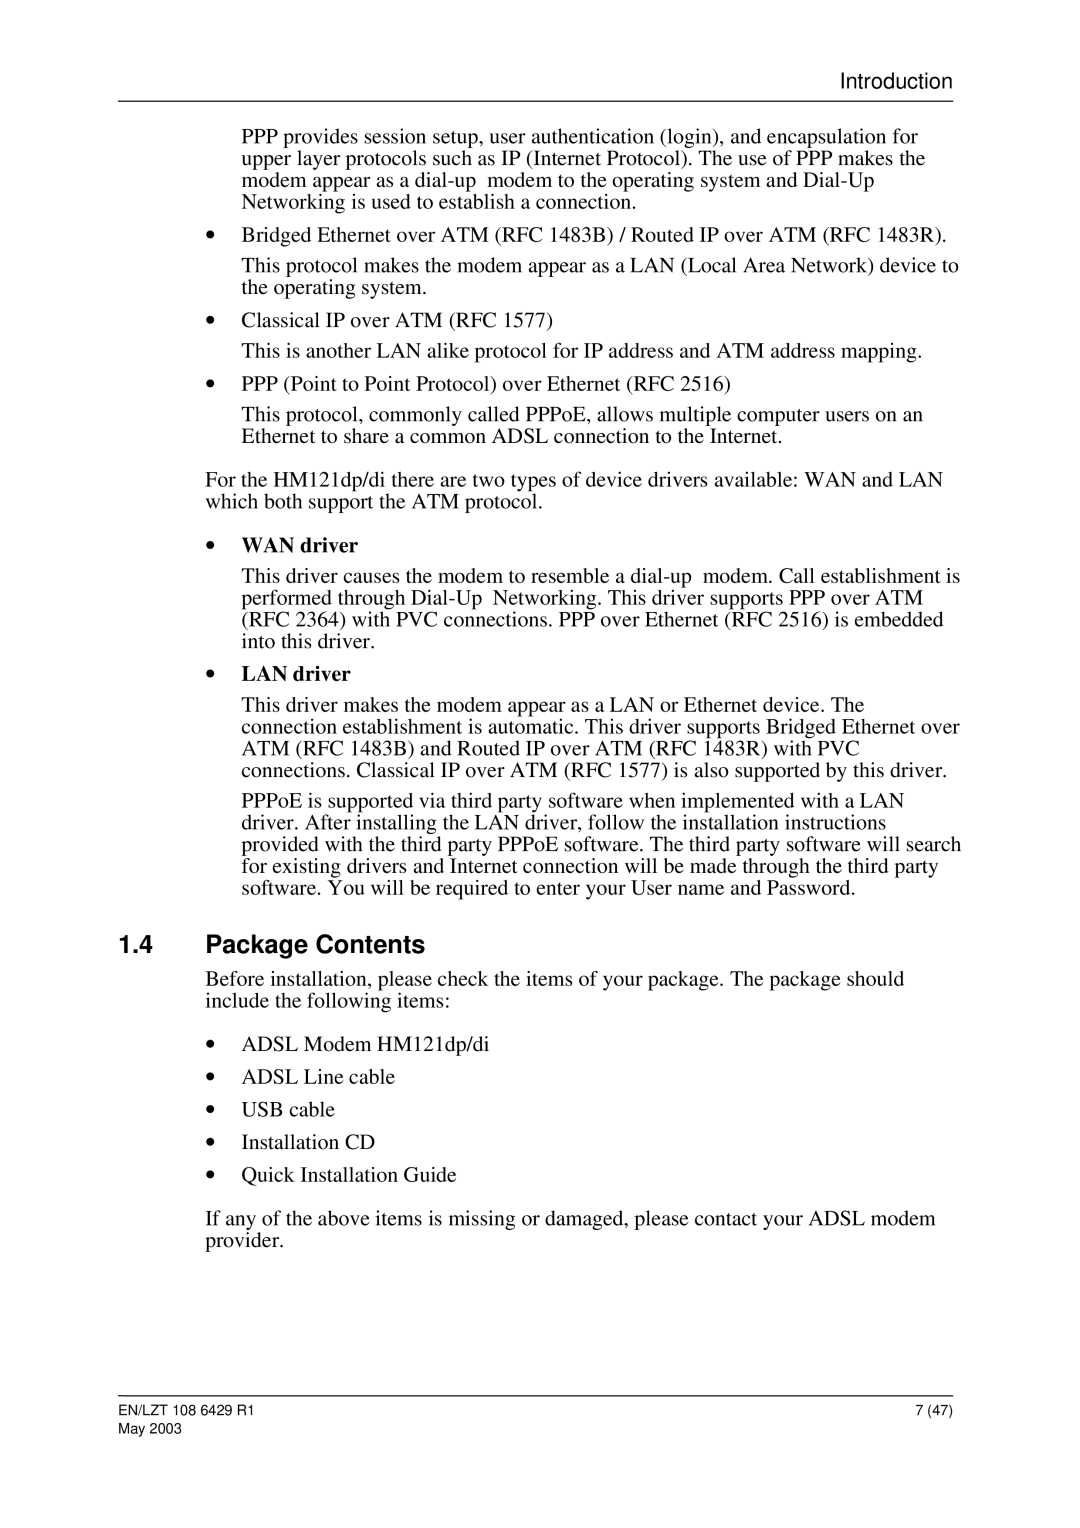 Ericsson HM121dp, HM121di manual Package Contents 